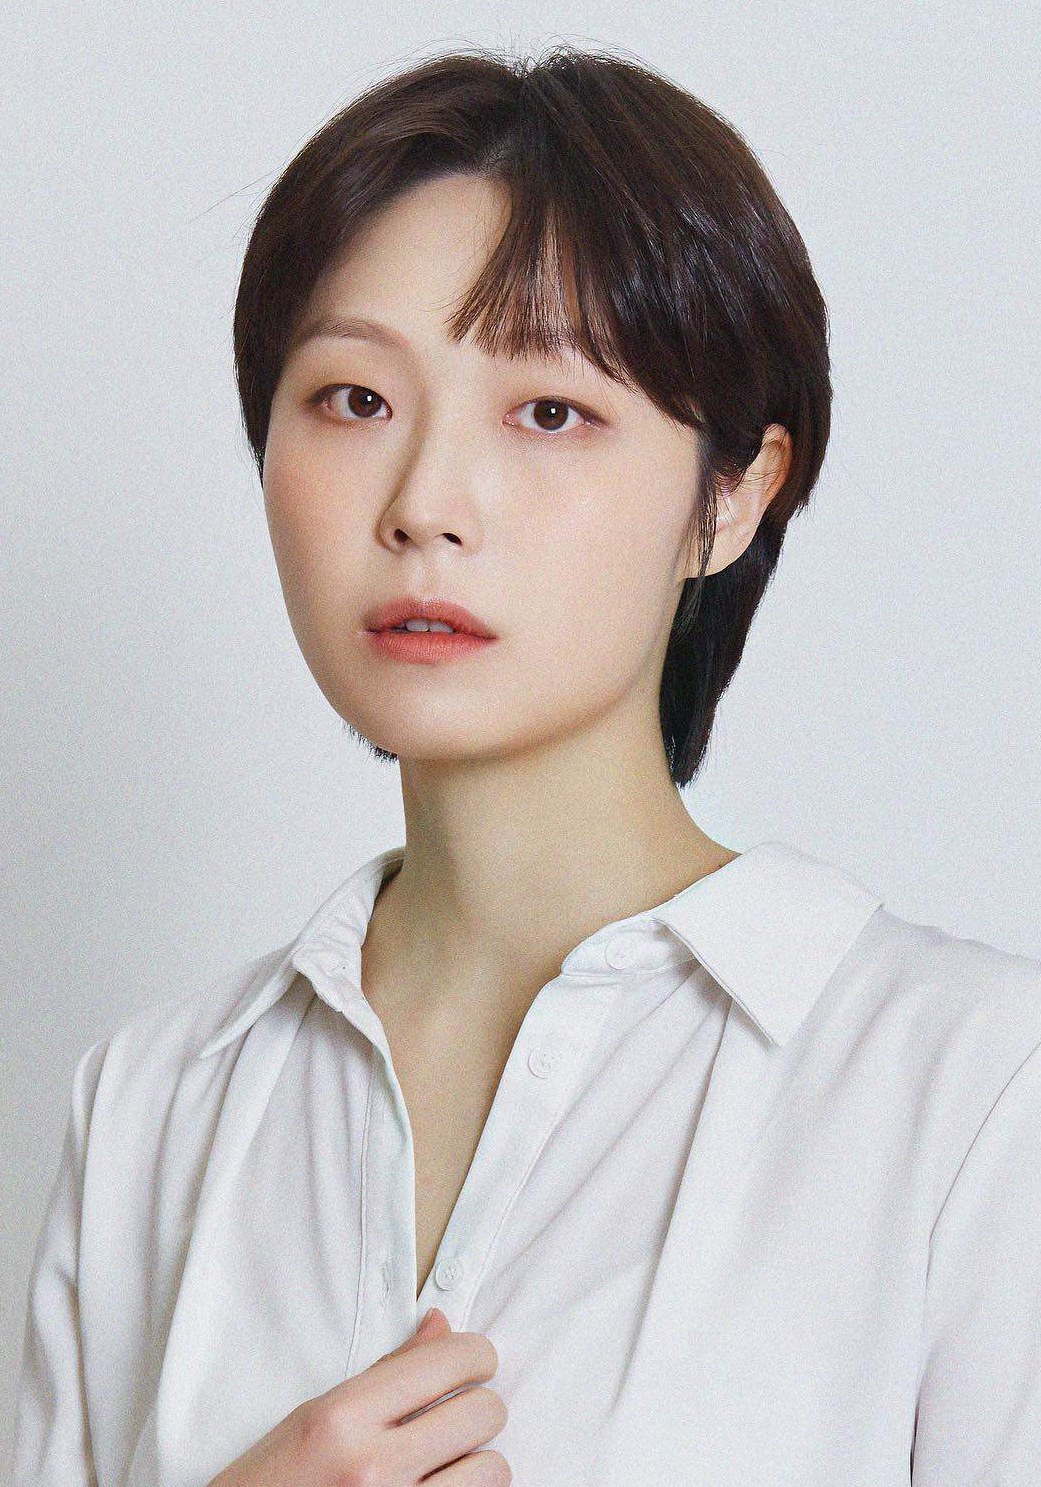 尹美京 Yoon Mi Kyung